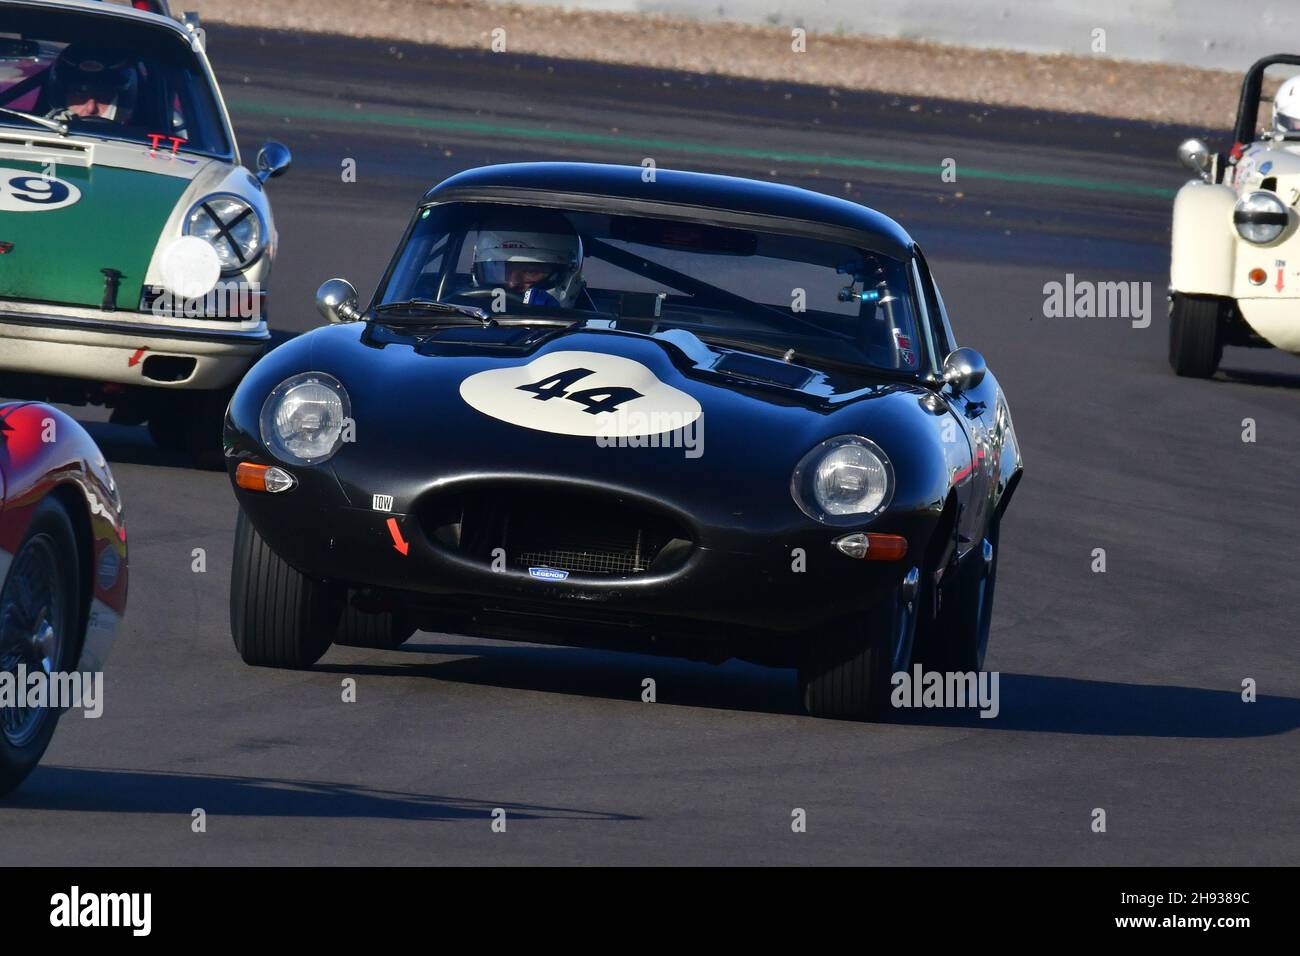 Simon Cars - Jaguar E-type Racing